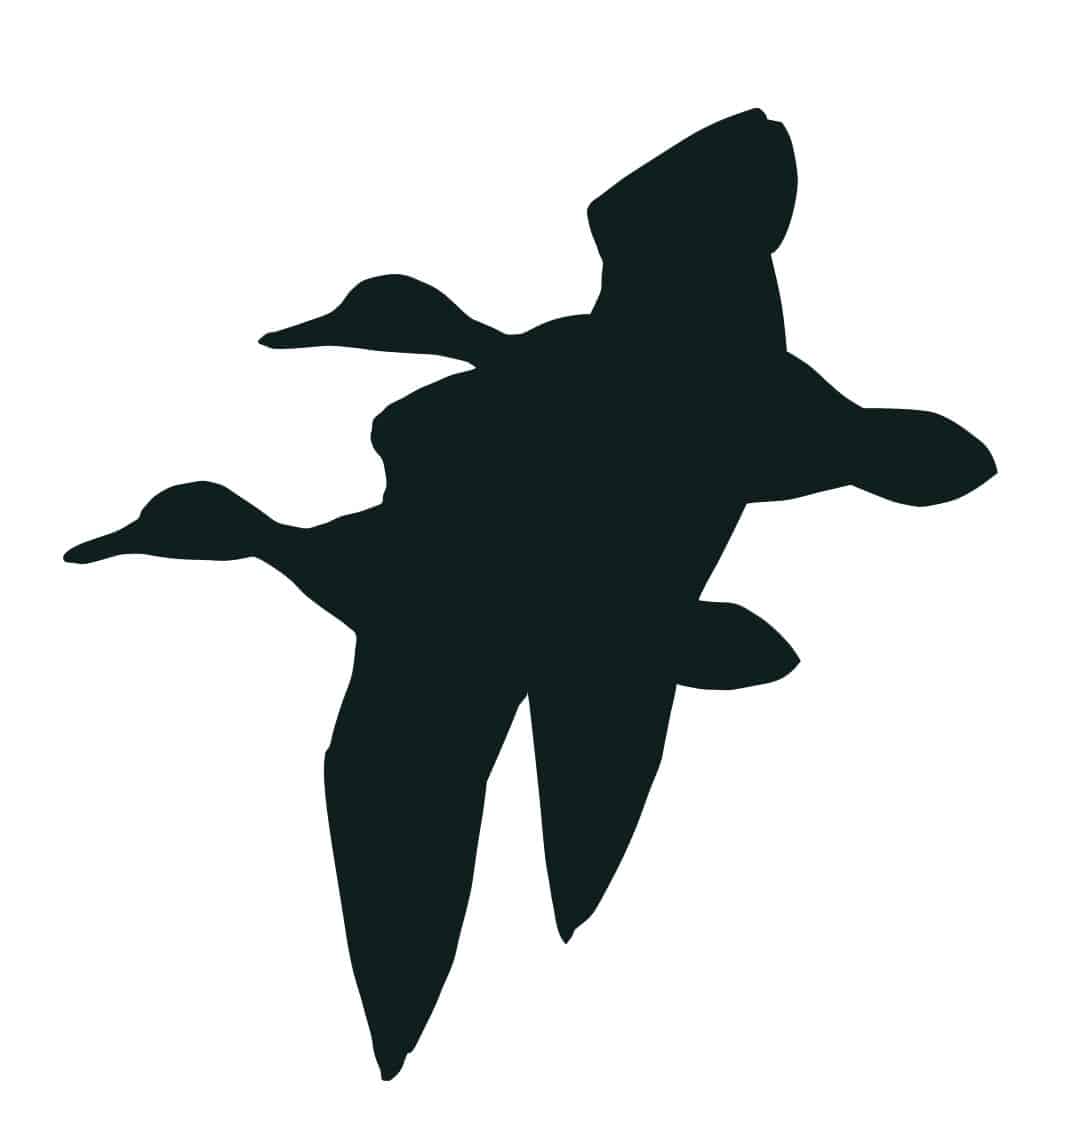 Flugsilhouette eines Stockentenpaares